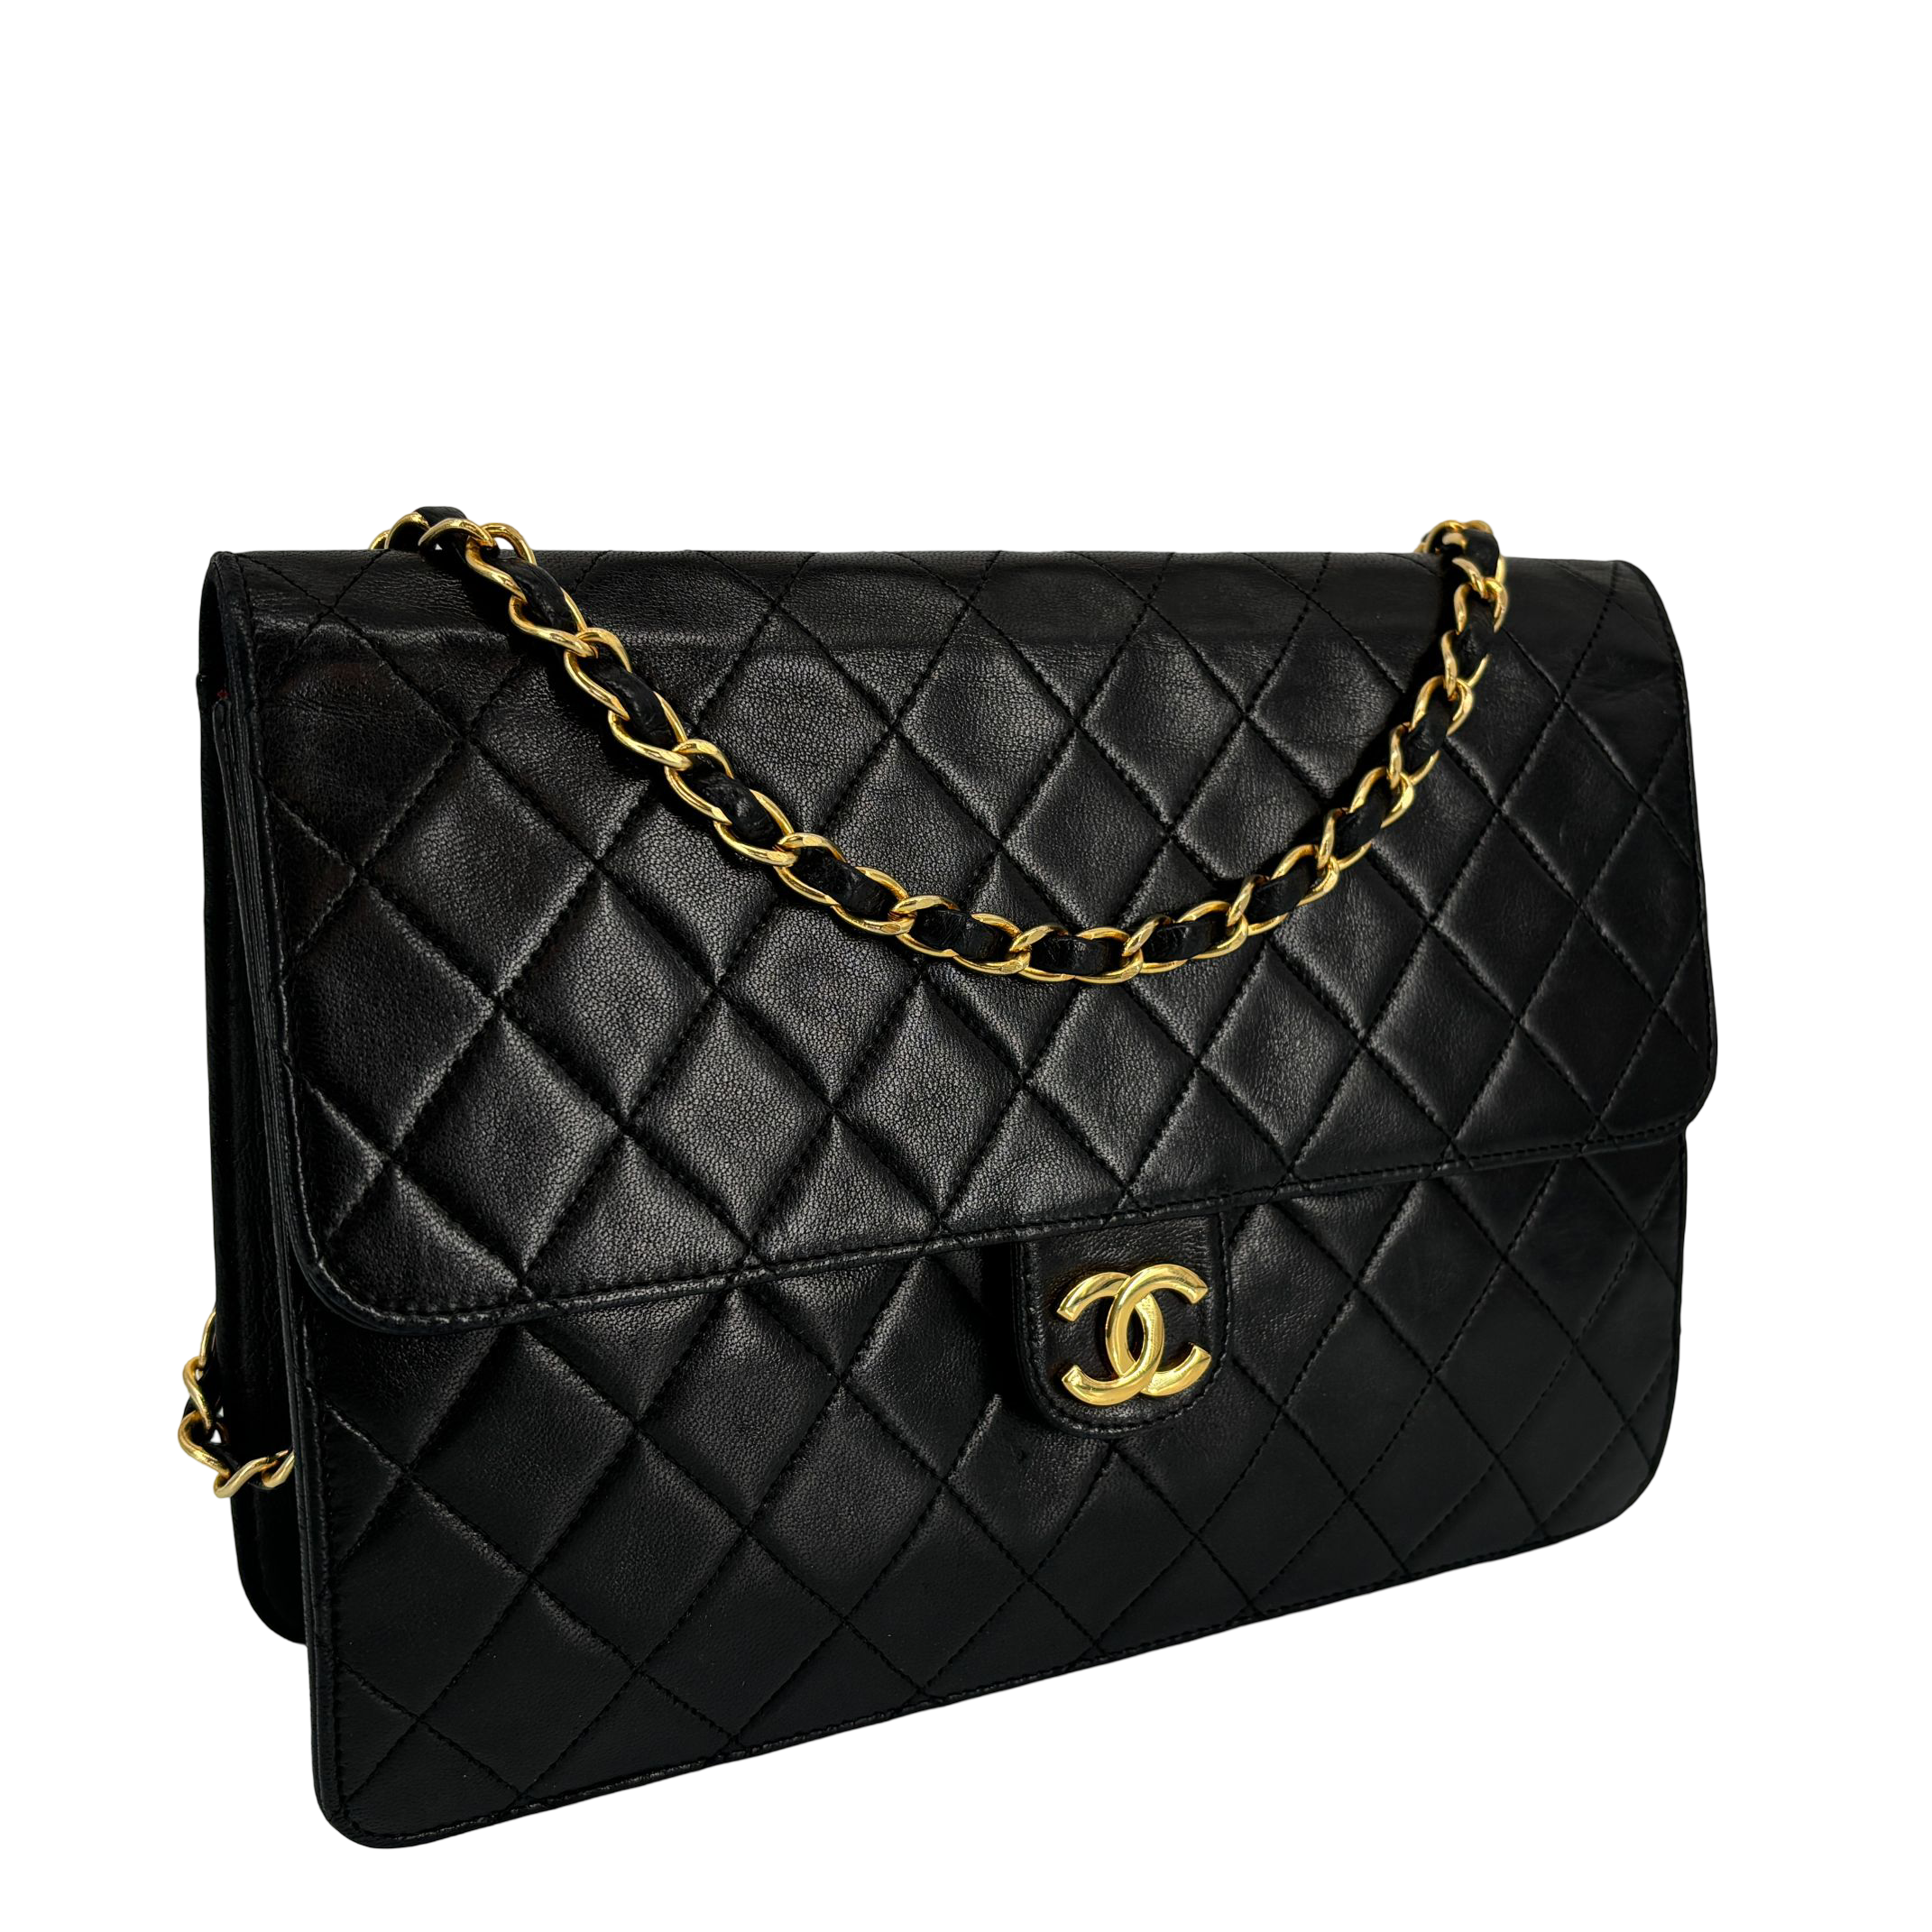 Chanel Single Flap Bag Push-Lock Black Matelassé Leather incl. Dustbag